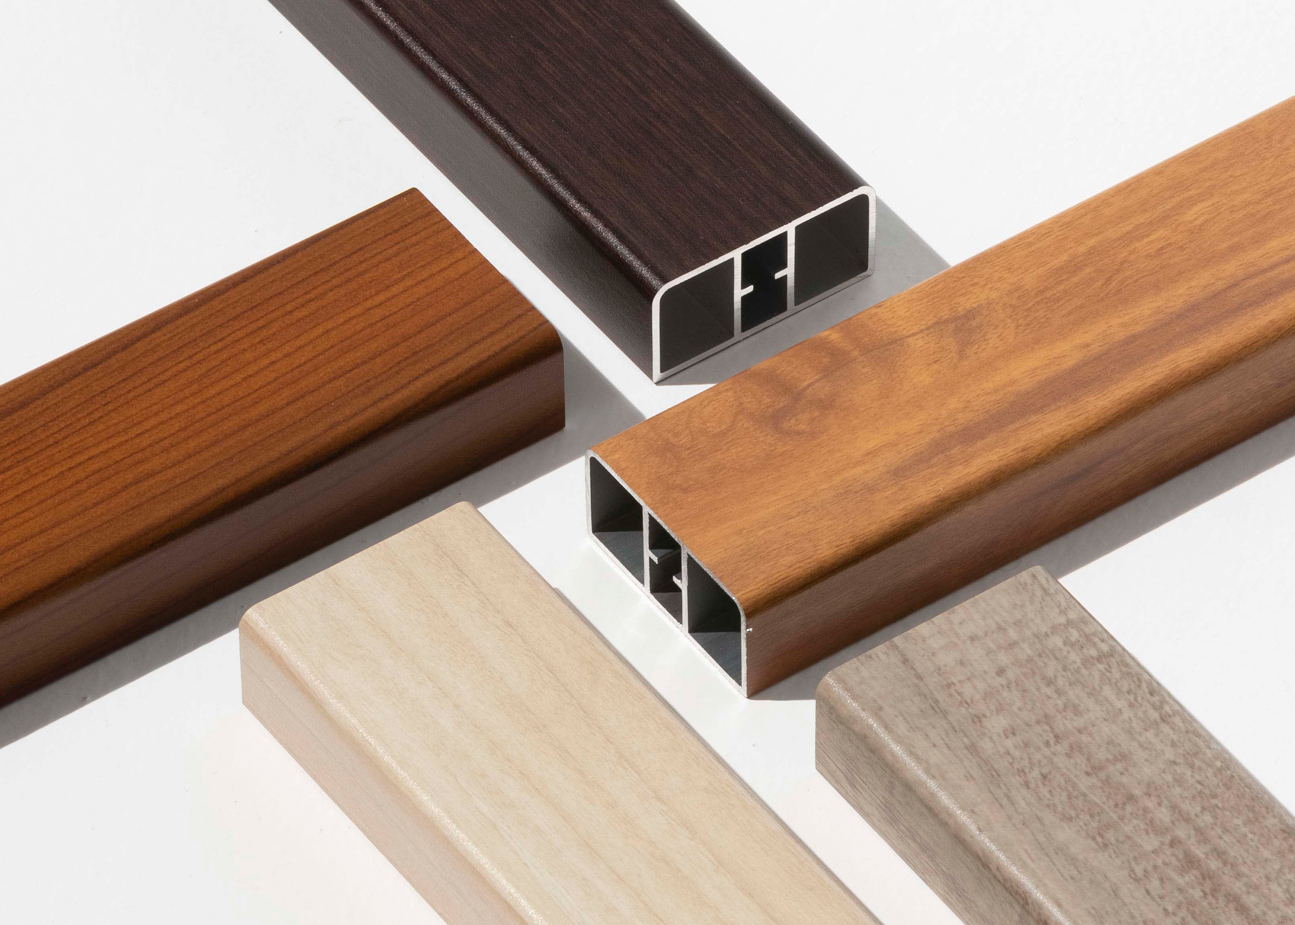 Select aluminium woodgrain battens for a timber alternative with easy maintenance.